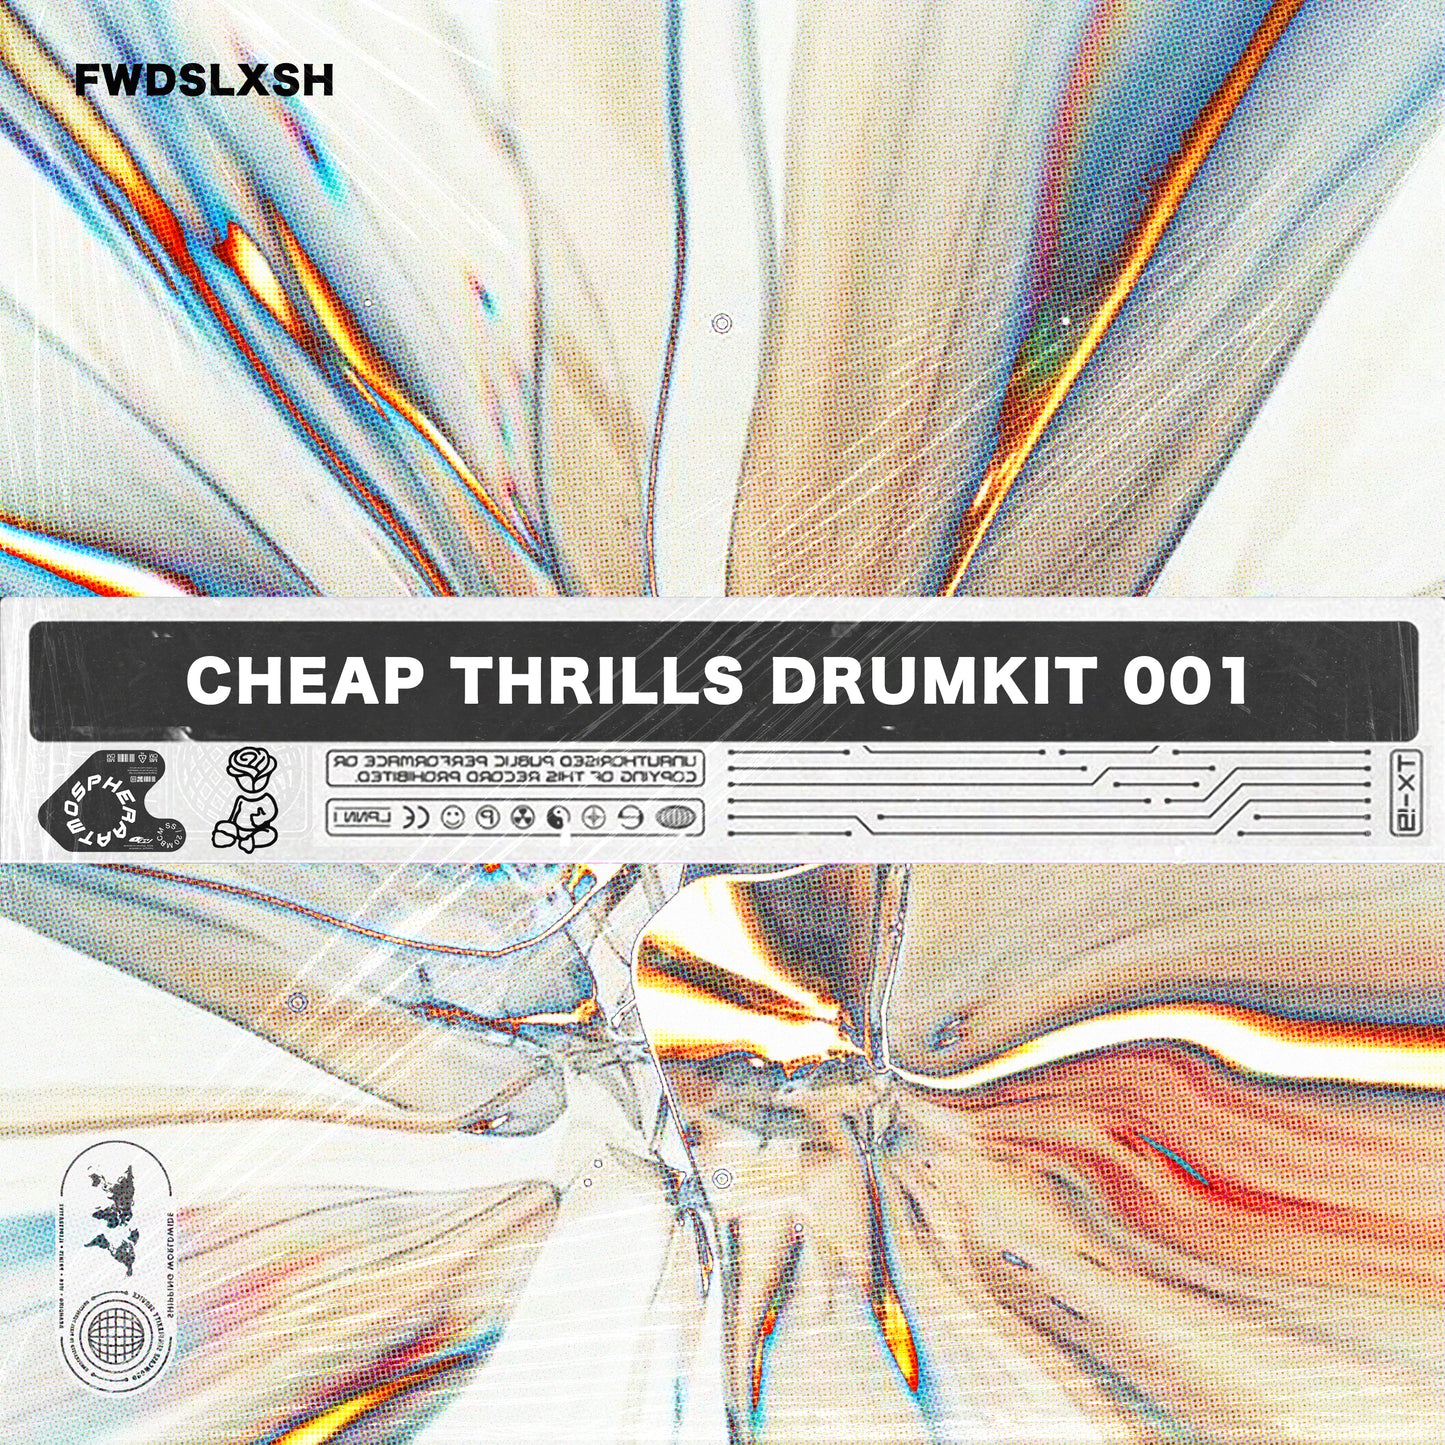 Fwdslxsh's Cheap Thrills Drumkit 001